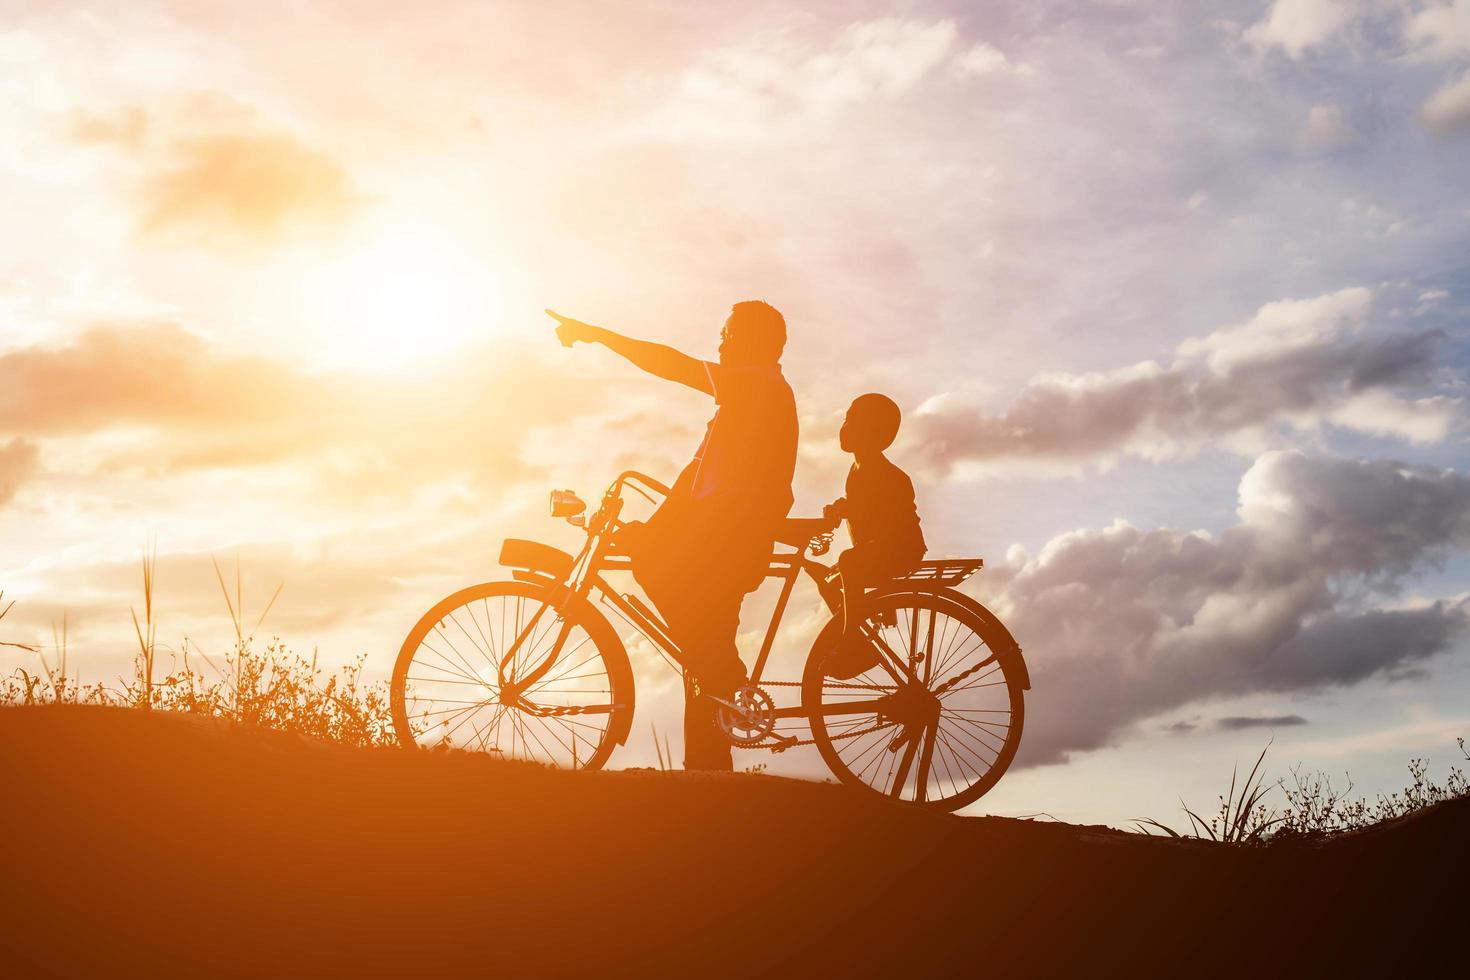 Biker-Familiensilhouette Vater und Sohn foto